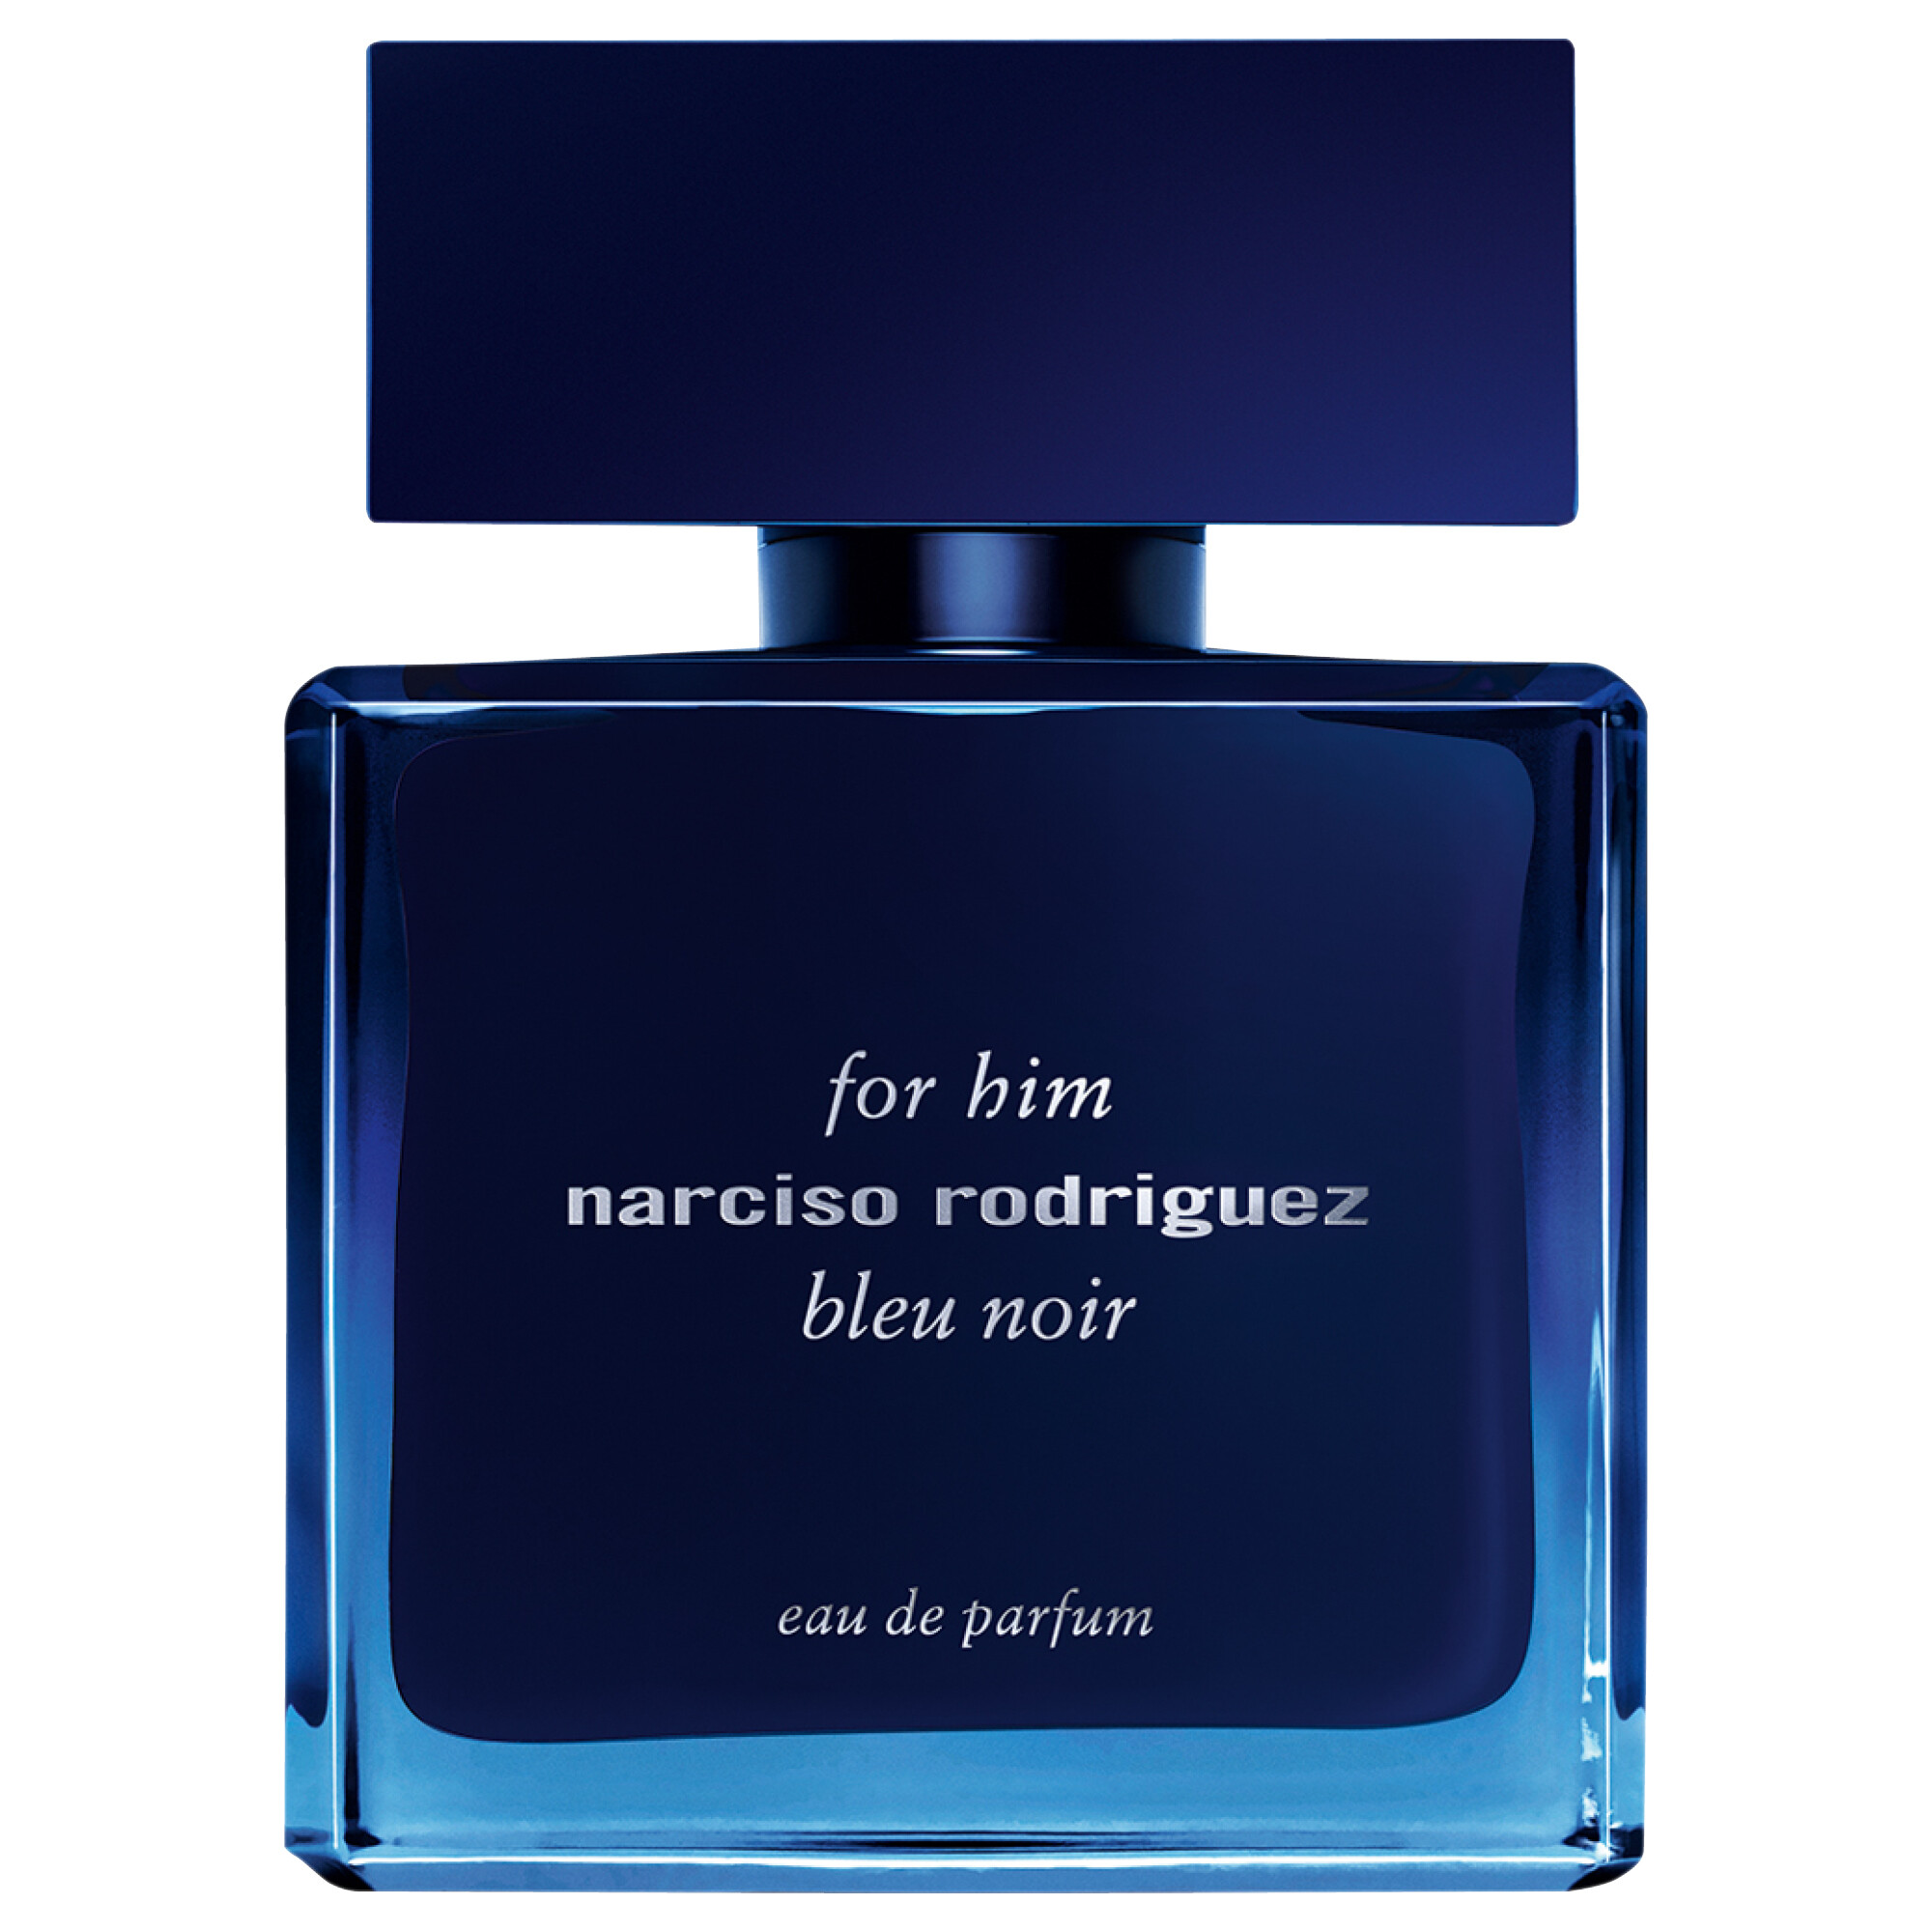 Narciso Rodriguez Narciso Rodriguez for him bleu noir kaufen